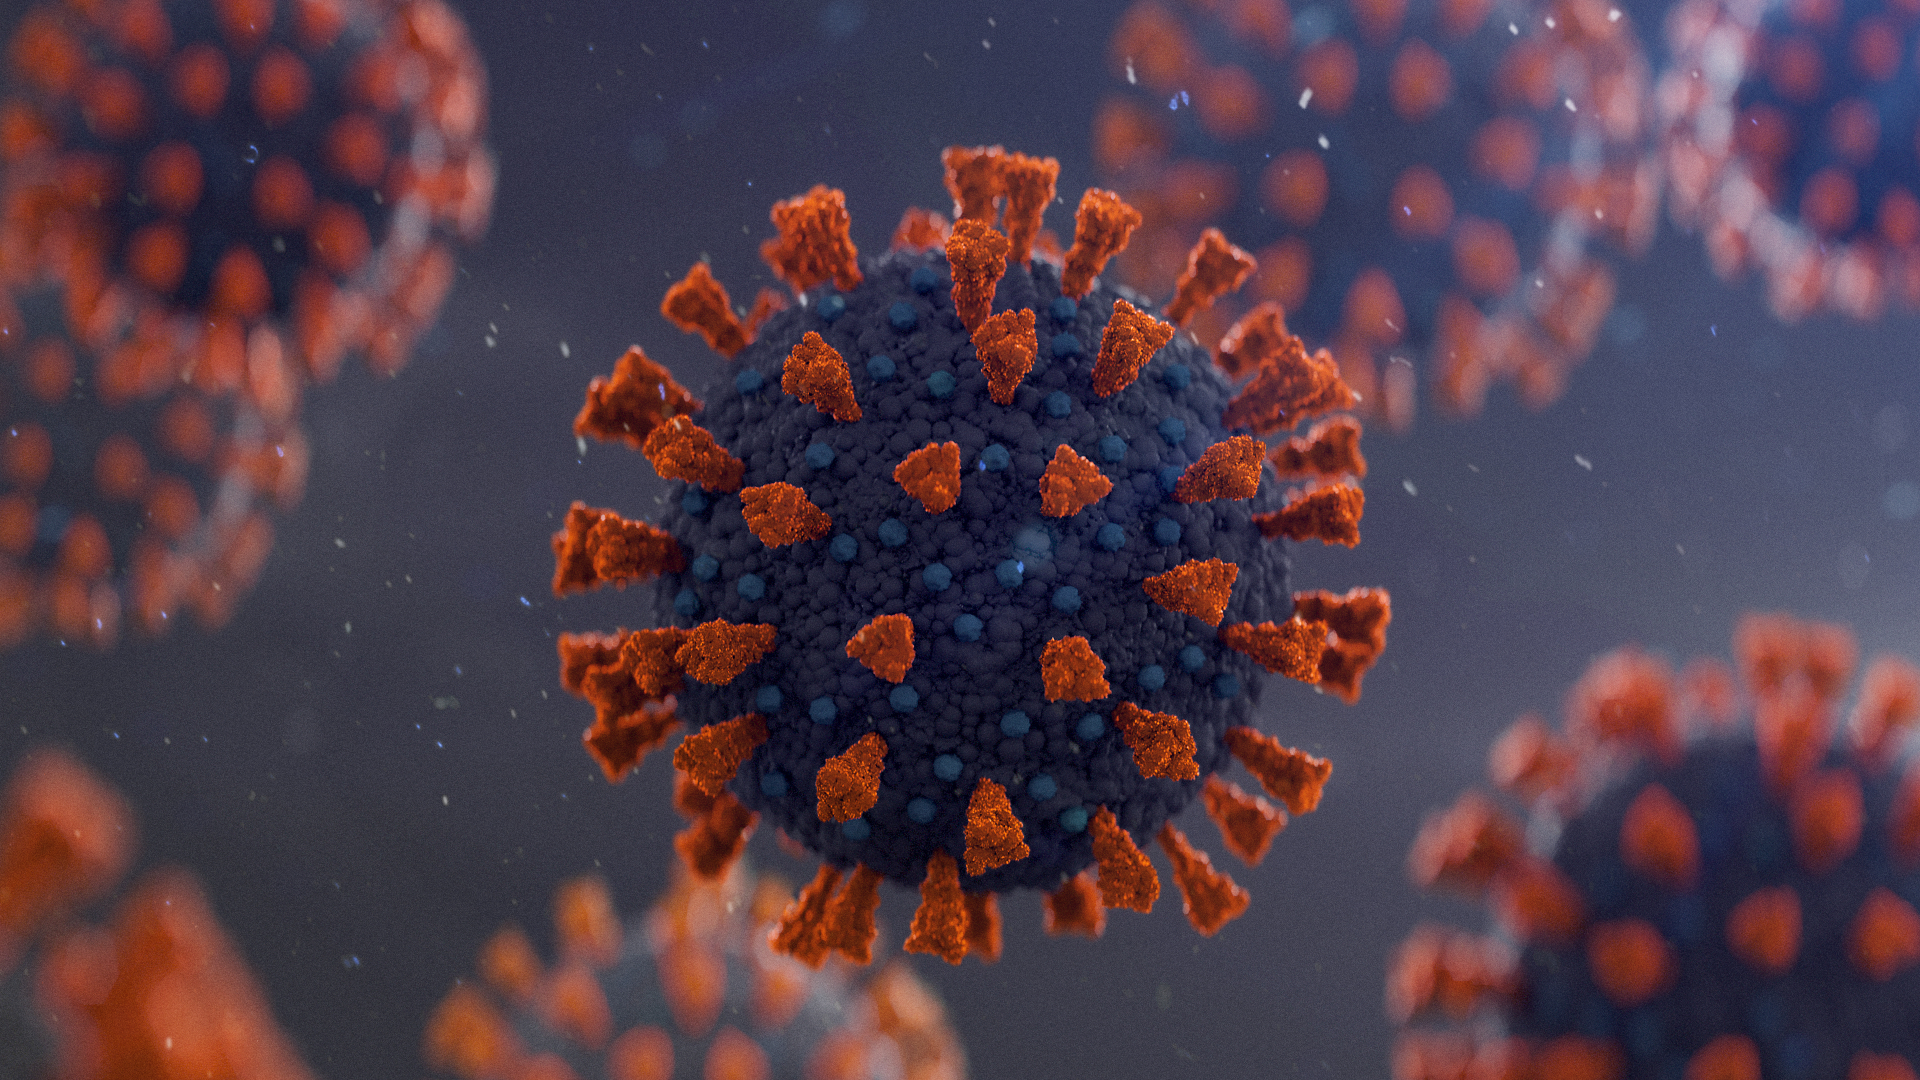 An artist's illustration of the COVID-19 virus